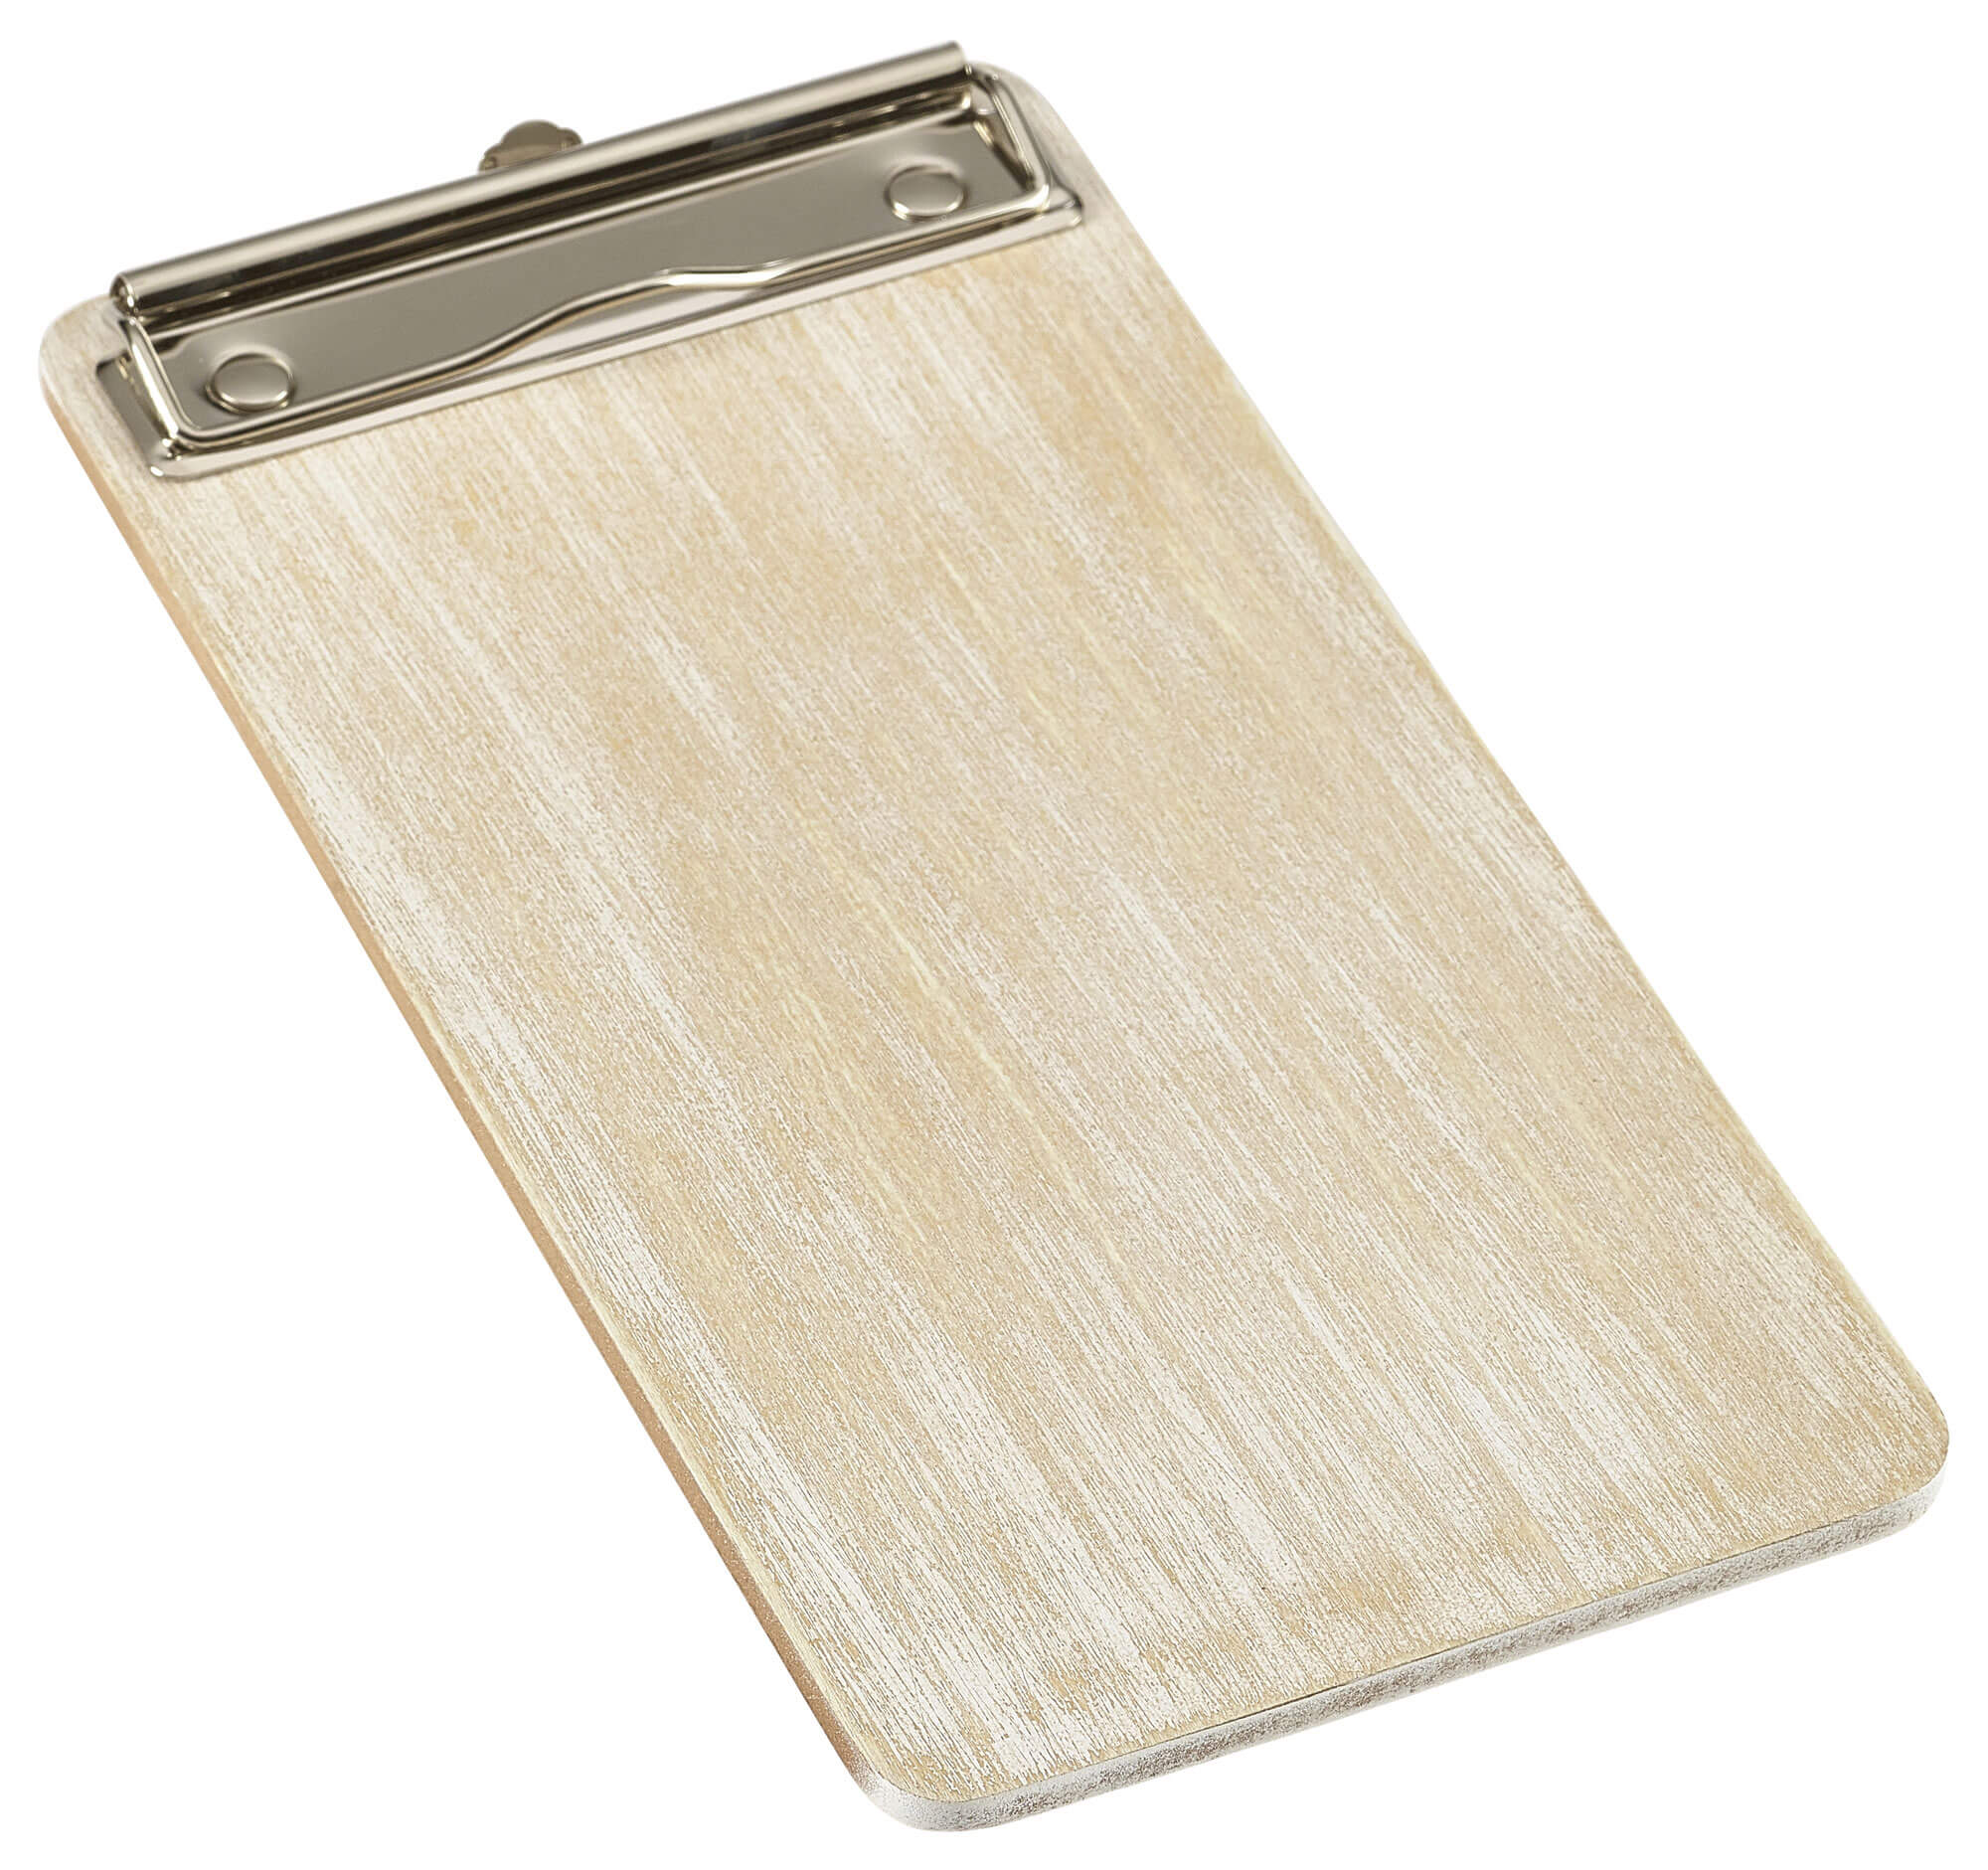 Clipboard elongated (24,5x13cm), wooden - white